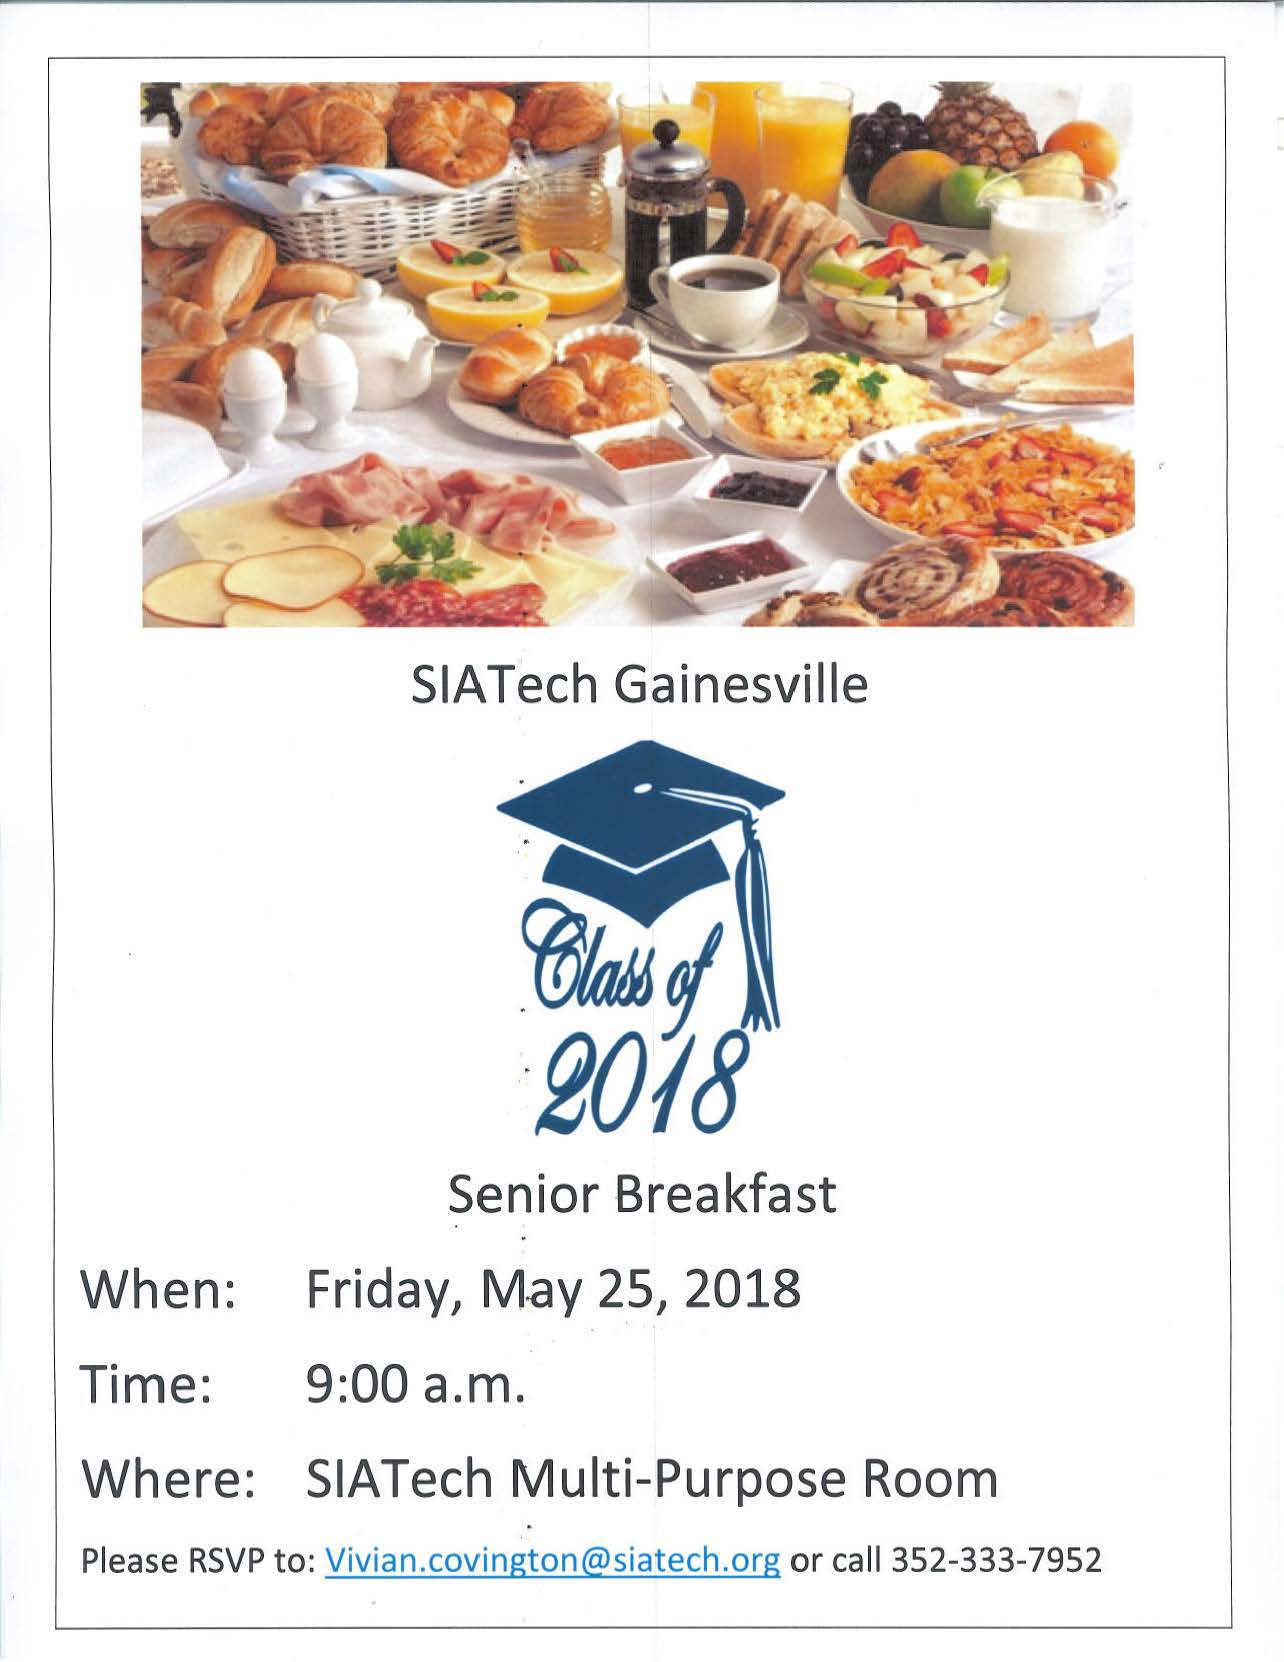 SIATech Gainesville Senior Breakfast 2018